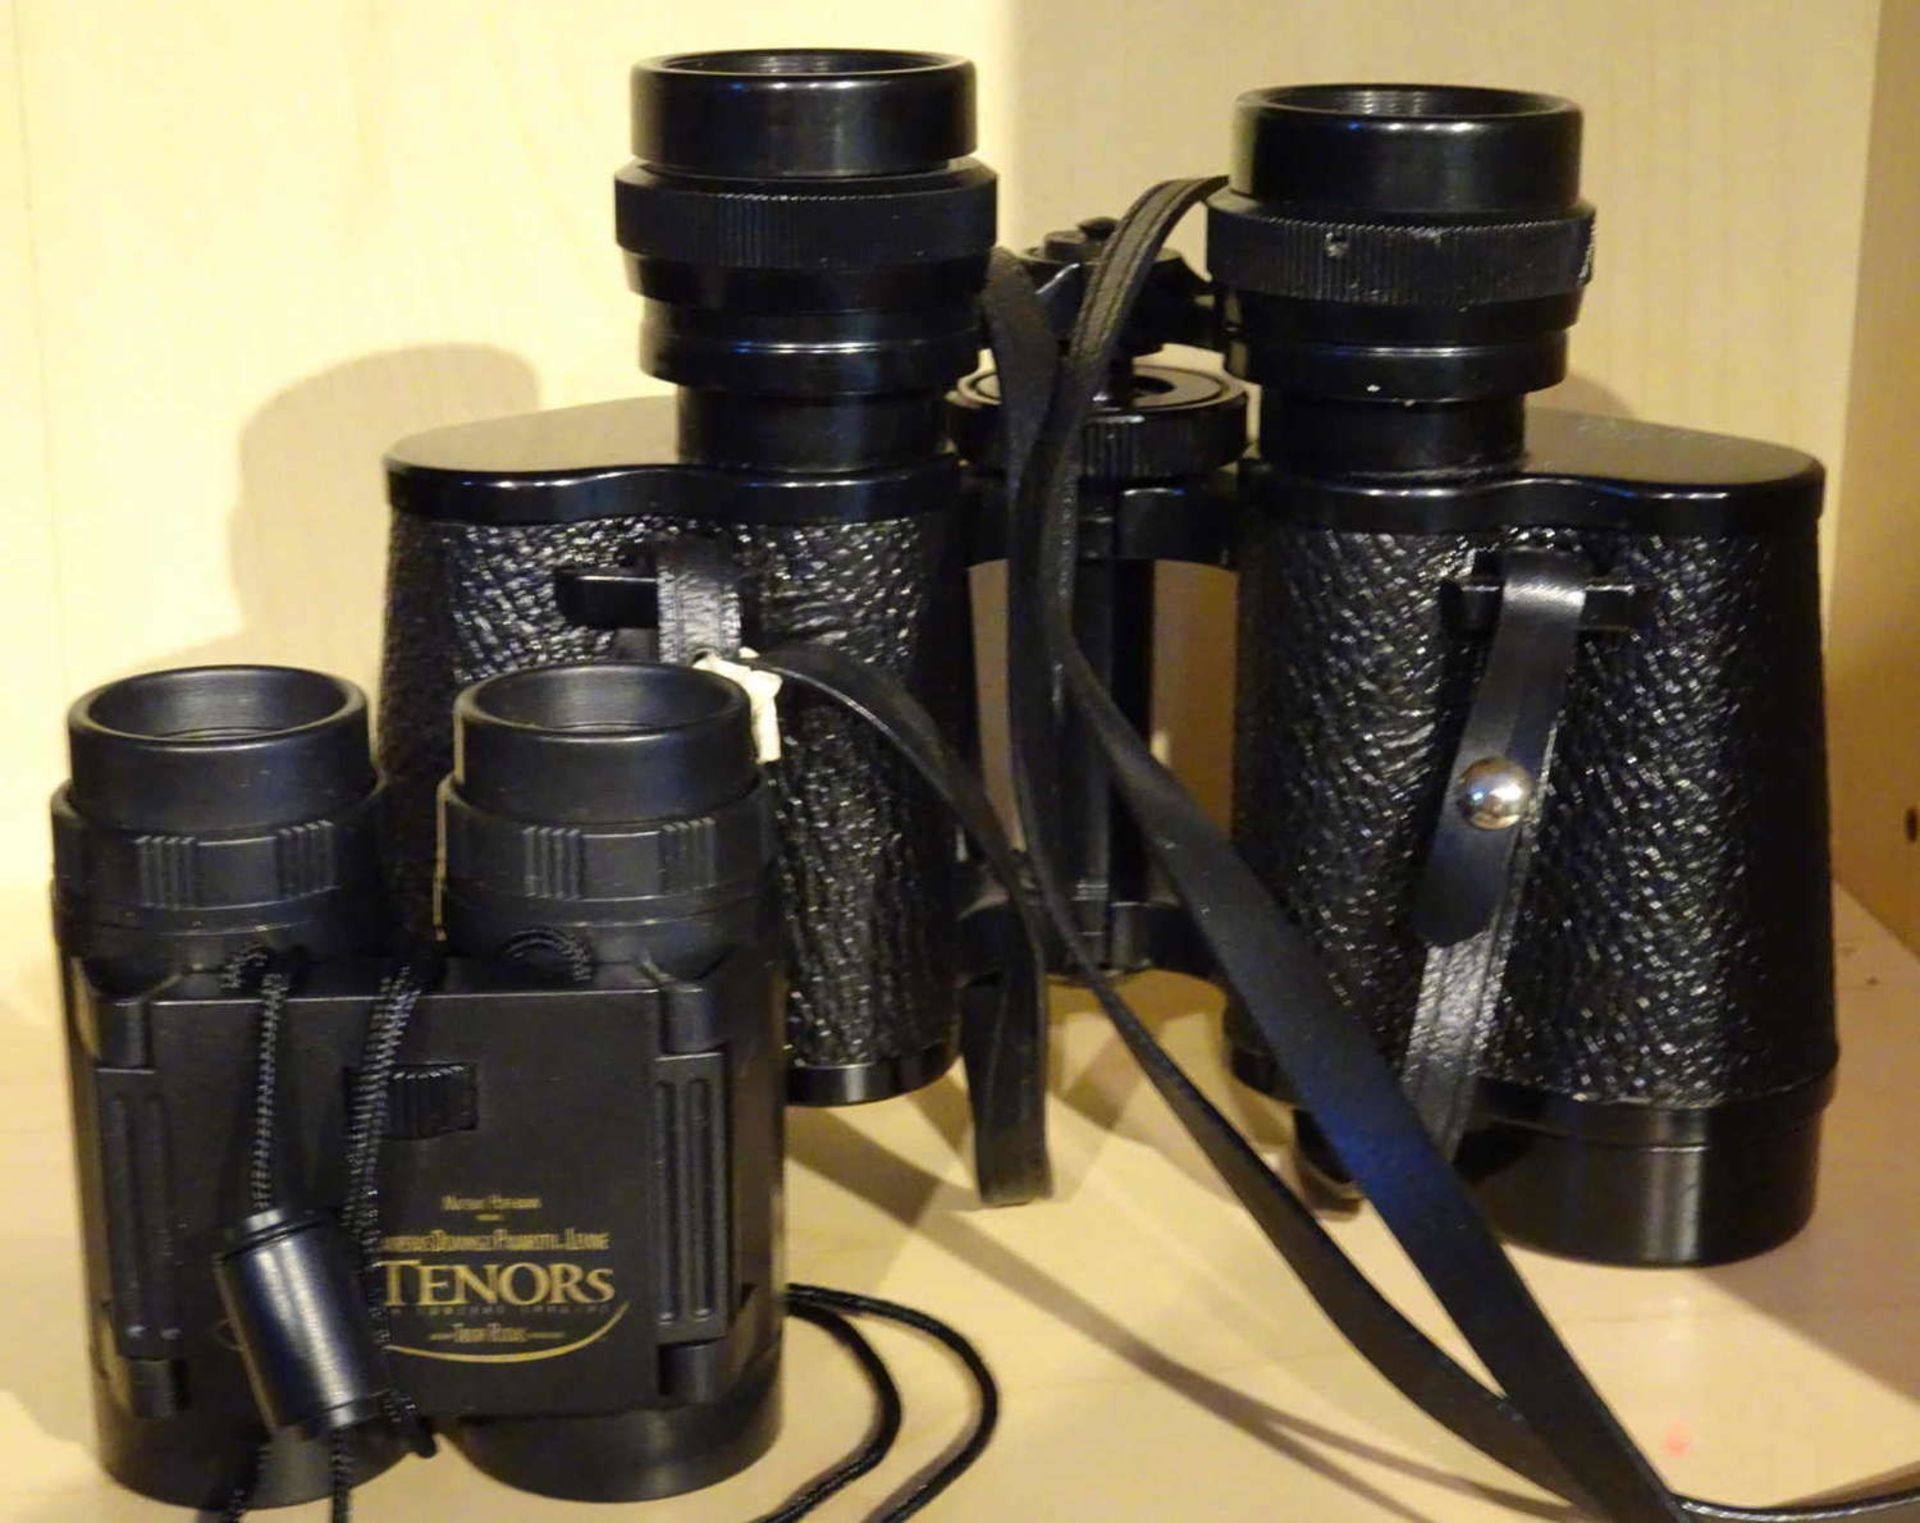 2 Ferngläser, aus Haushaltsauflösung2 binoculars, from budget resolution